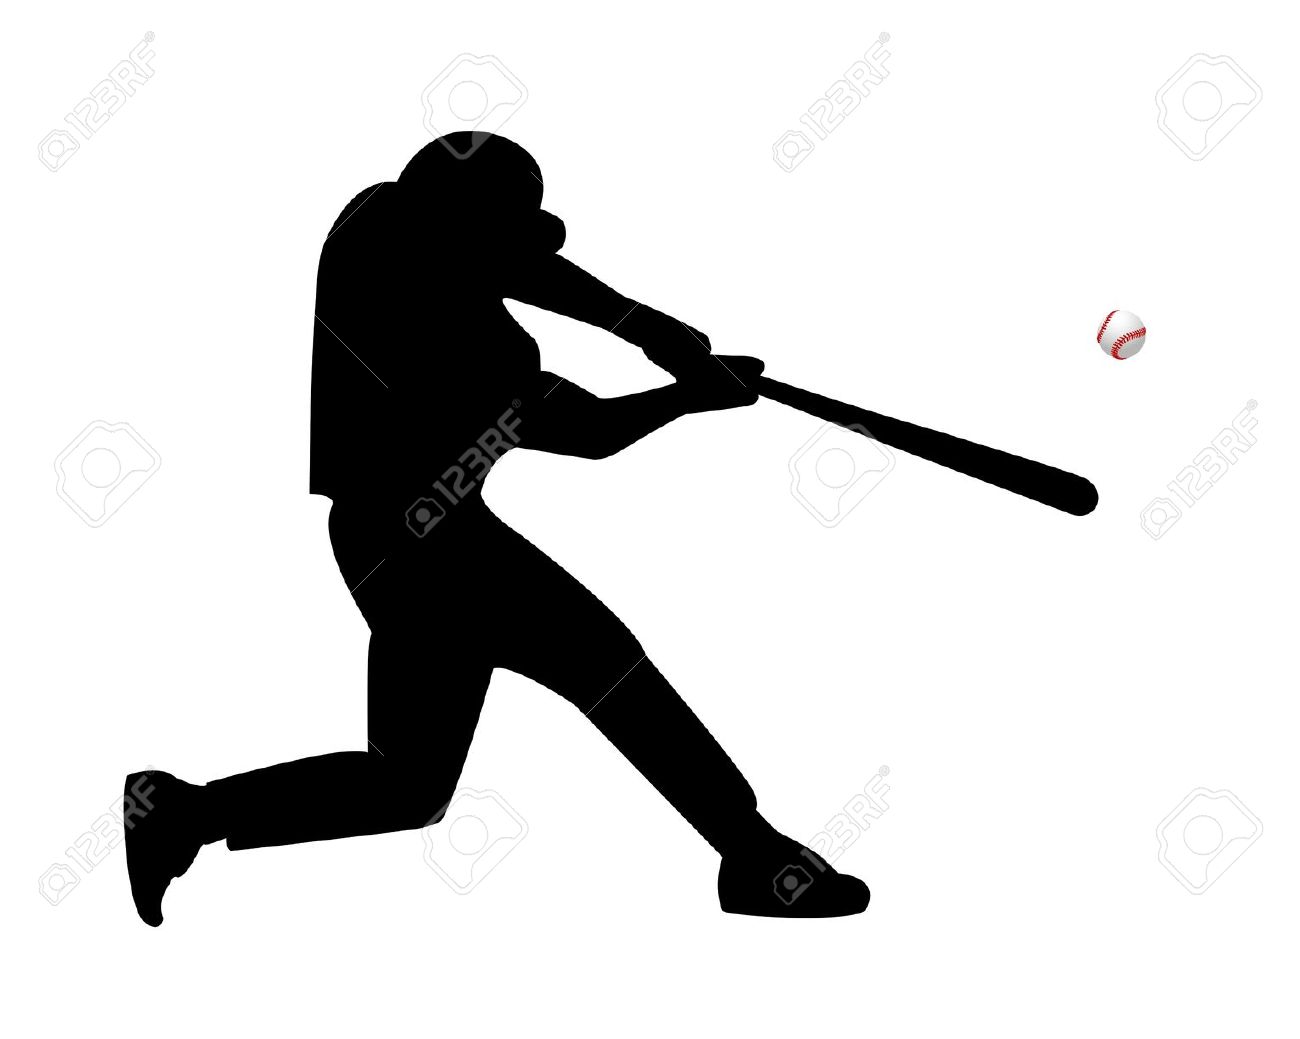 Black and white baseball player clipart 